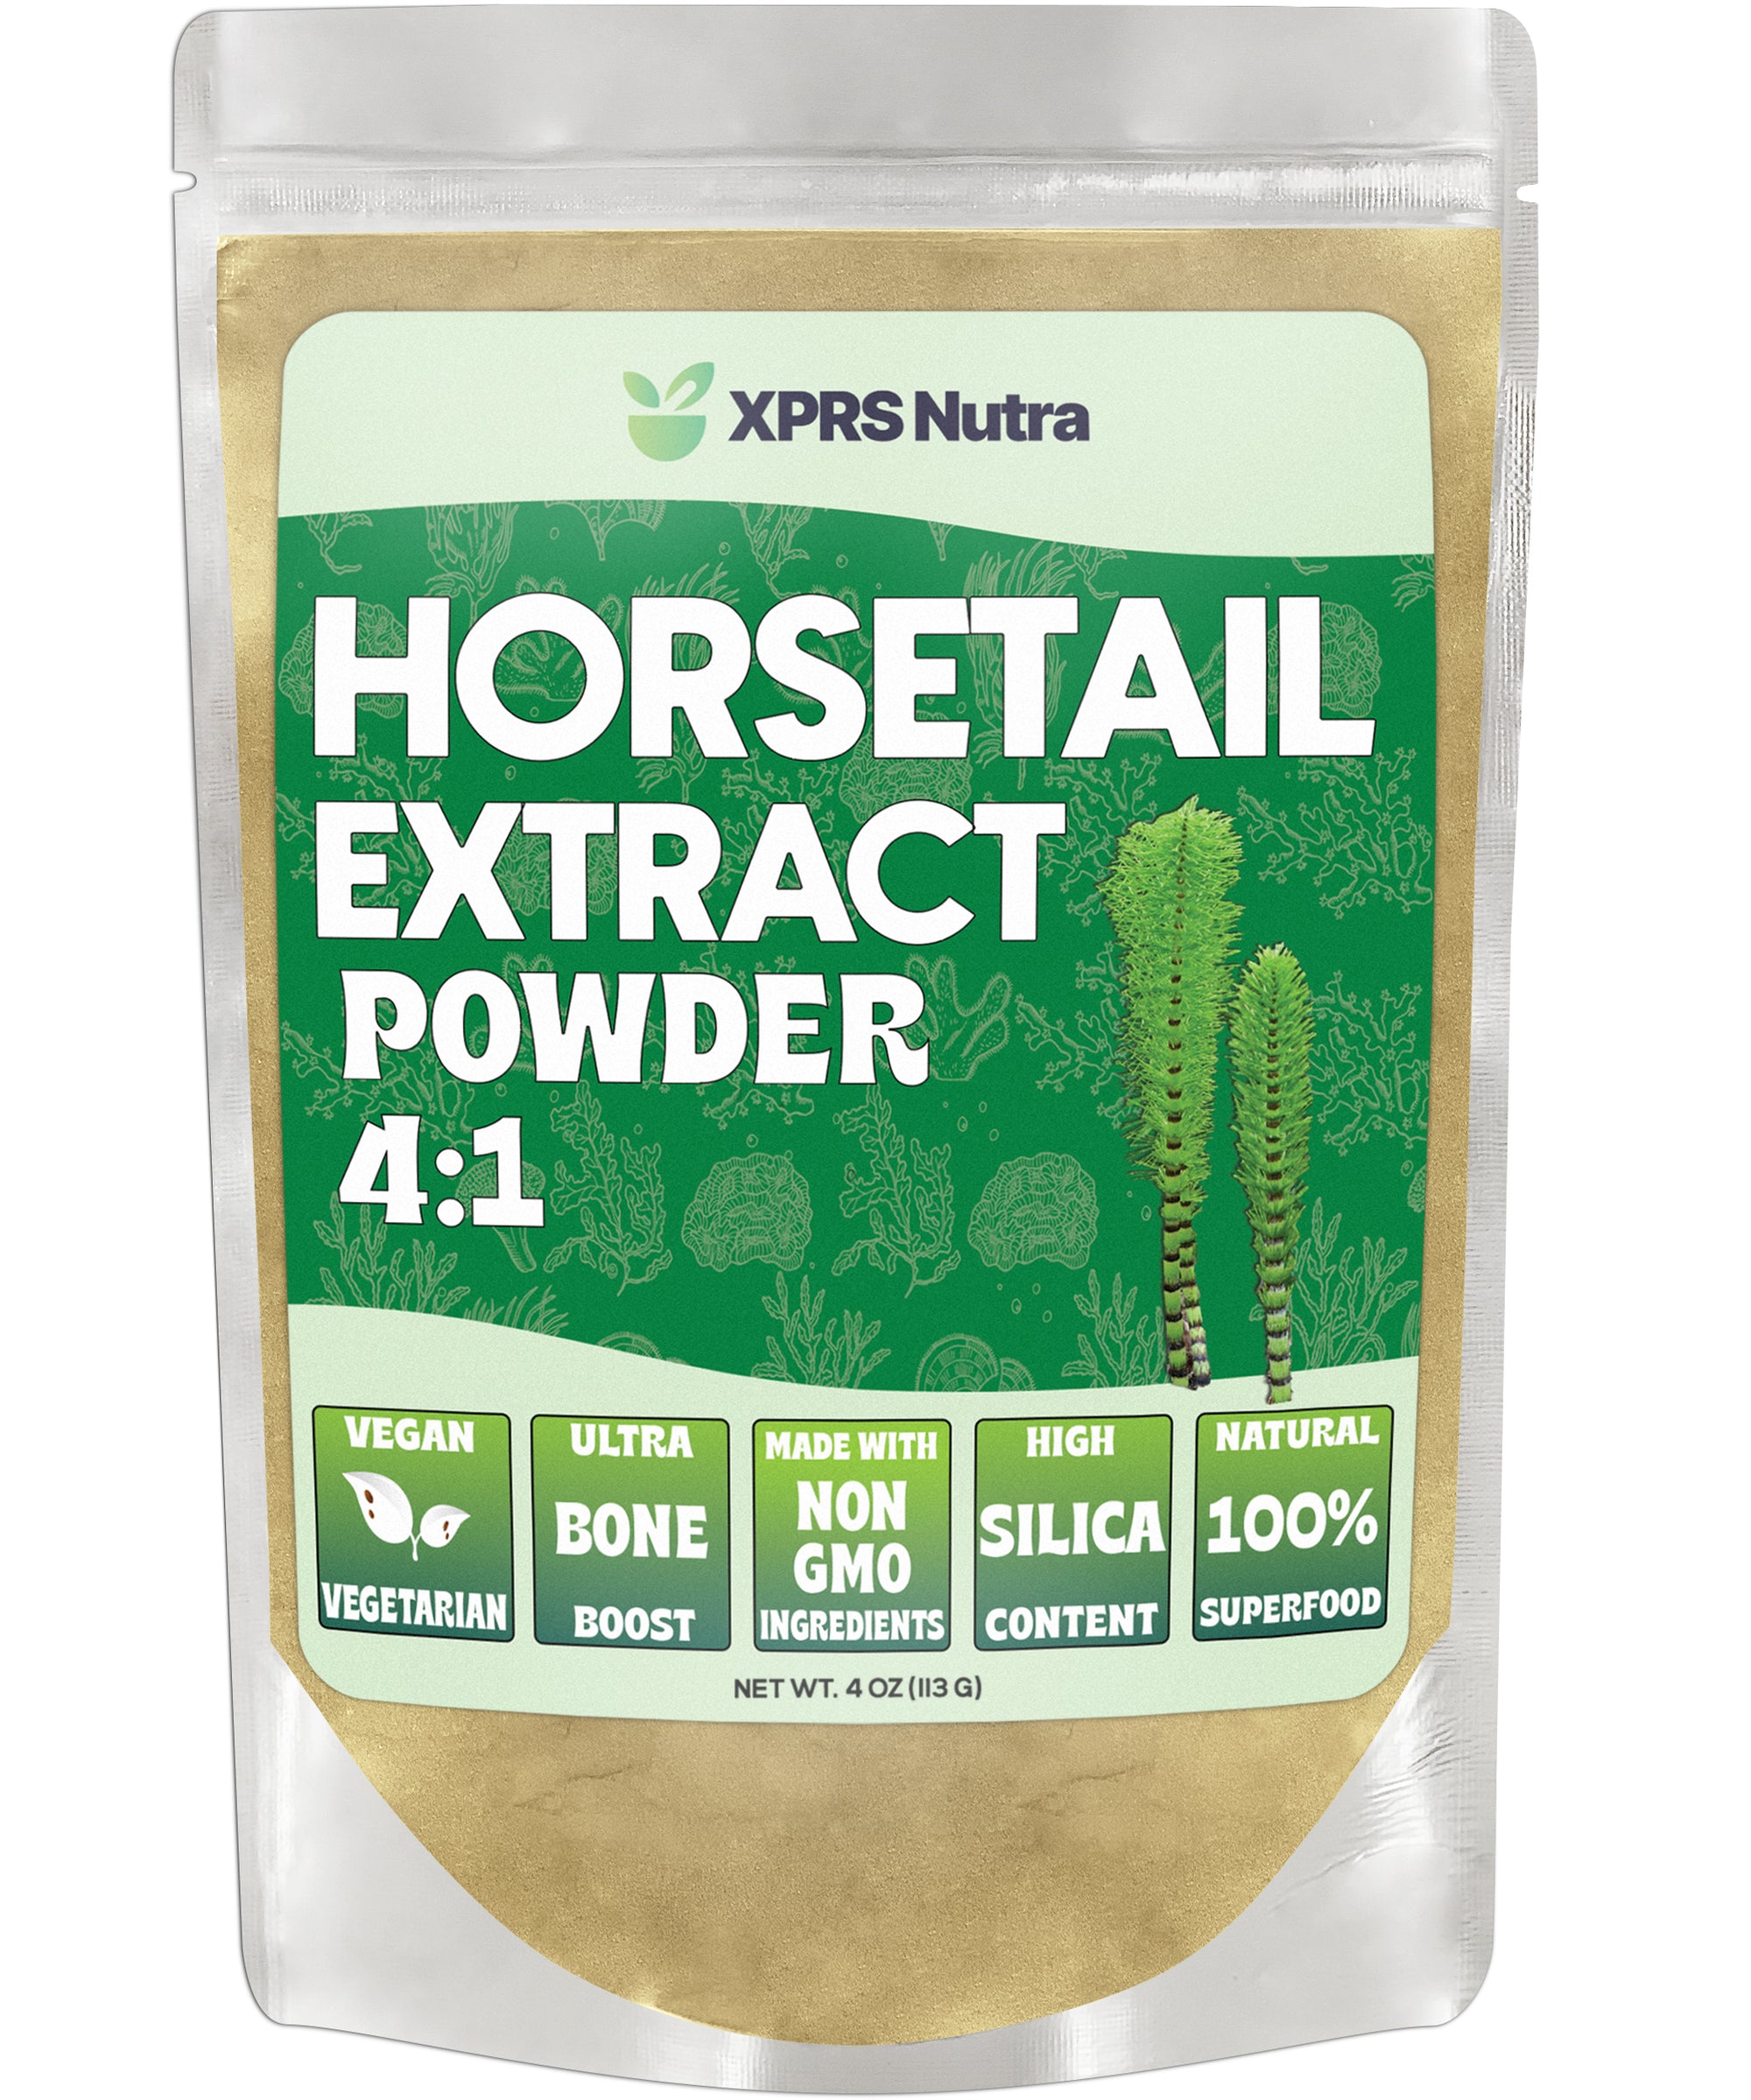 Horsetail Extract Powder